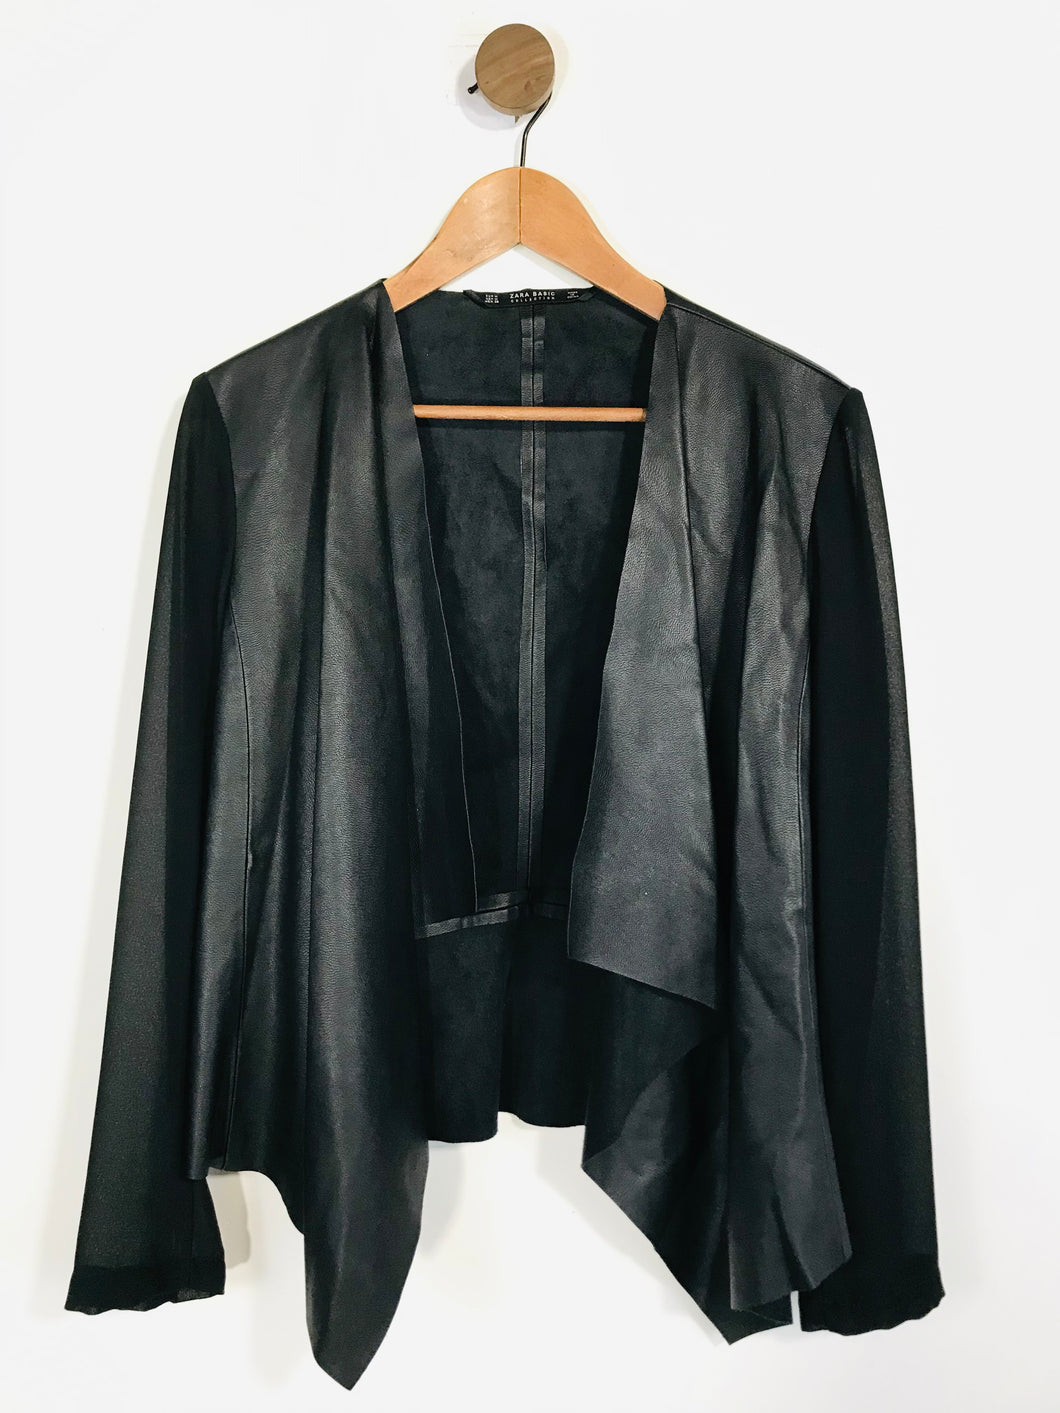 Zara Women's Leather Mesh Bomber Jacket | M UK10-12 | Black